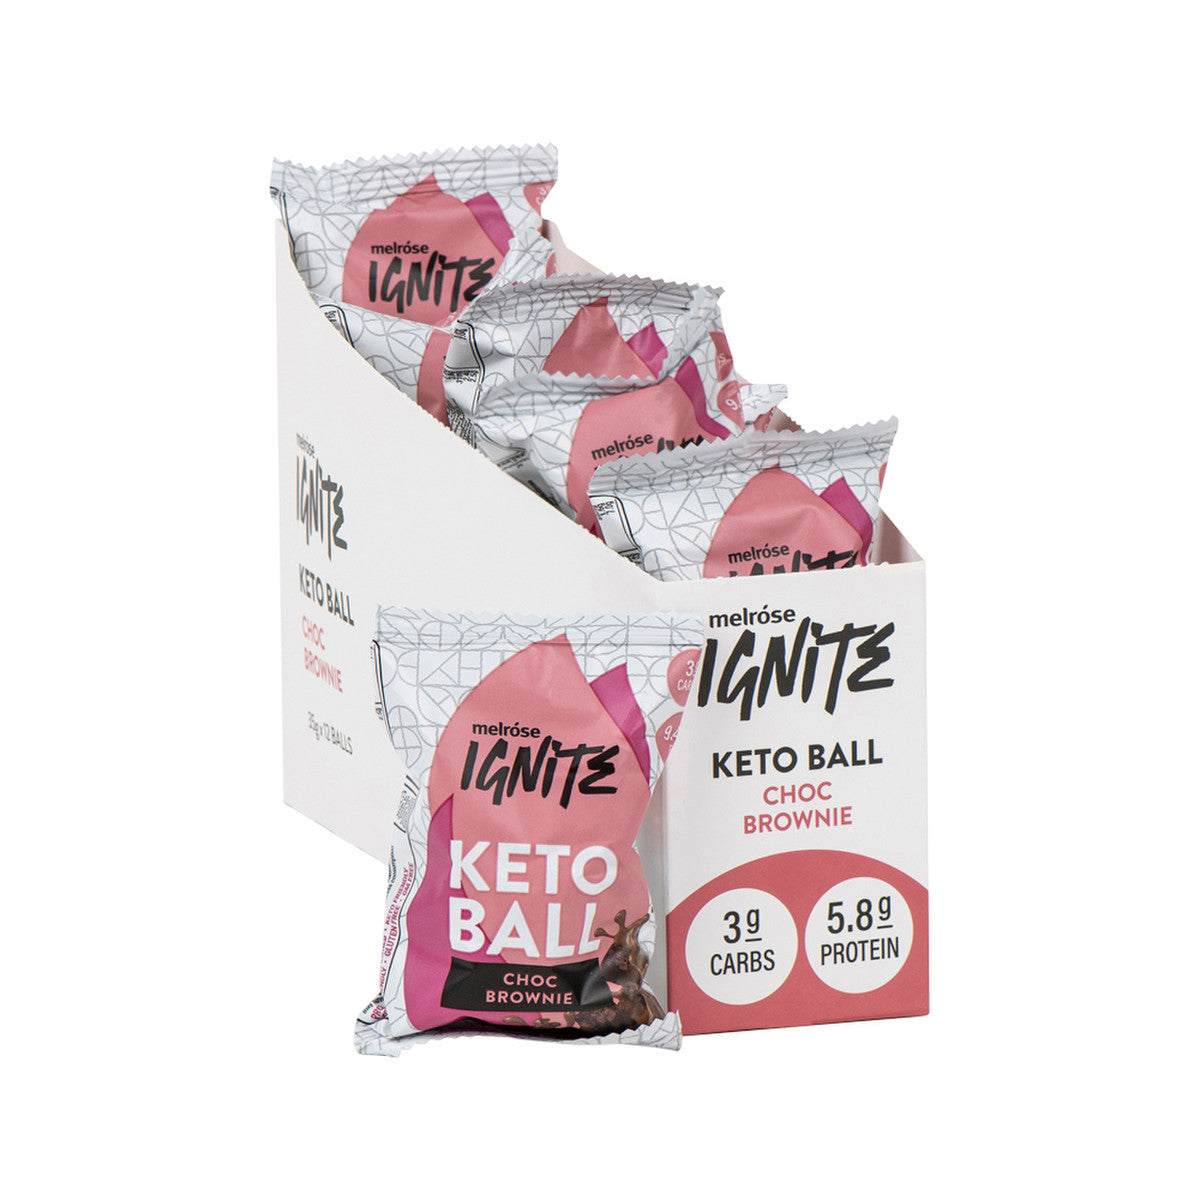 Melrose Ignite Keto Ball Choc Brownie 35g x 12